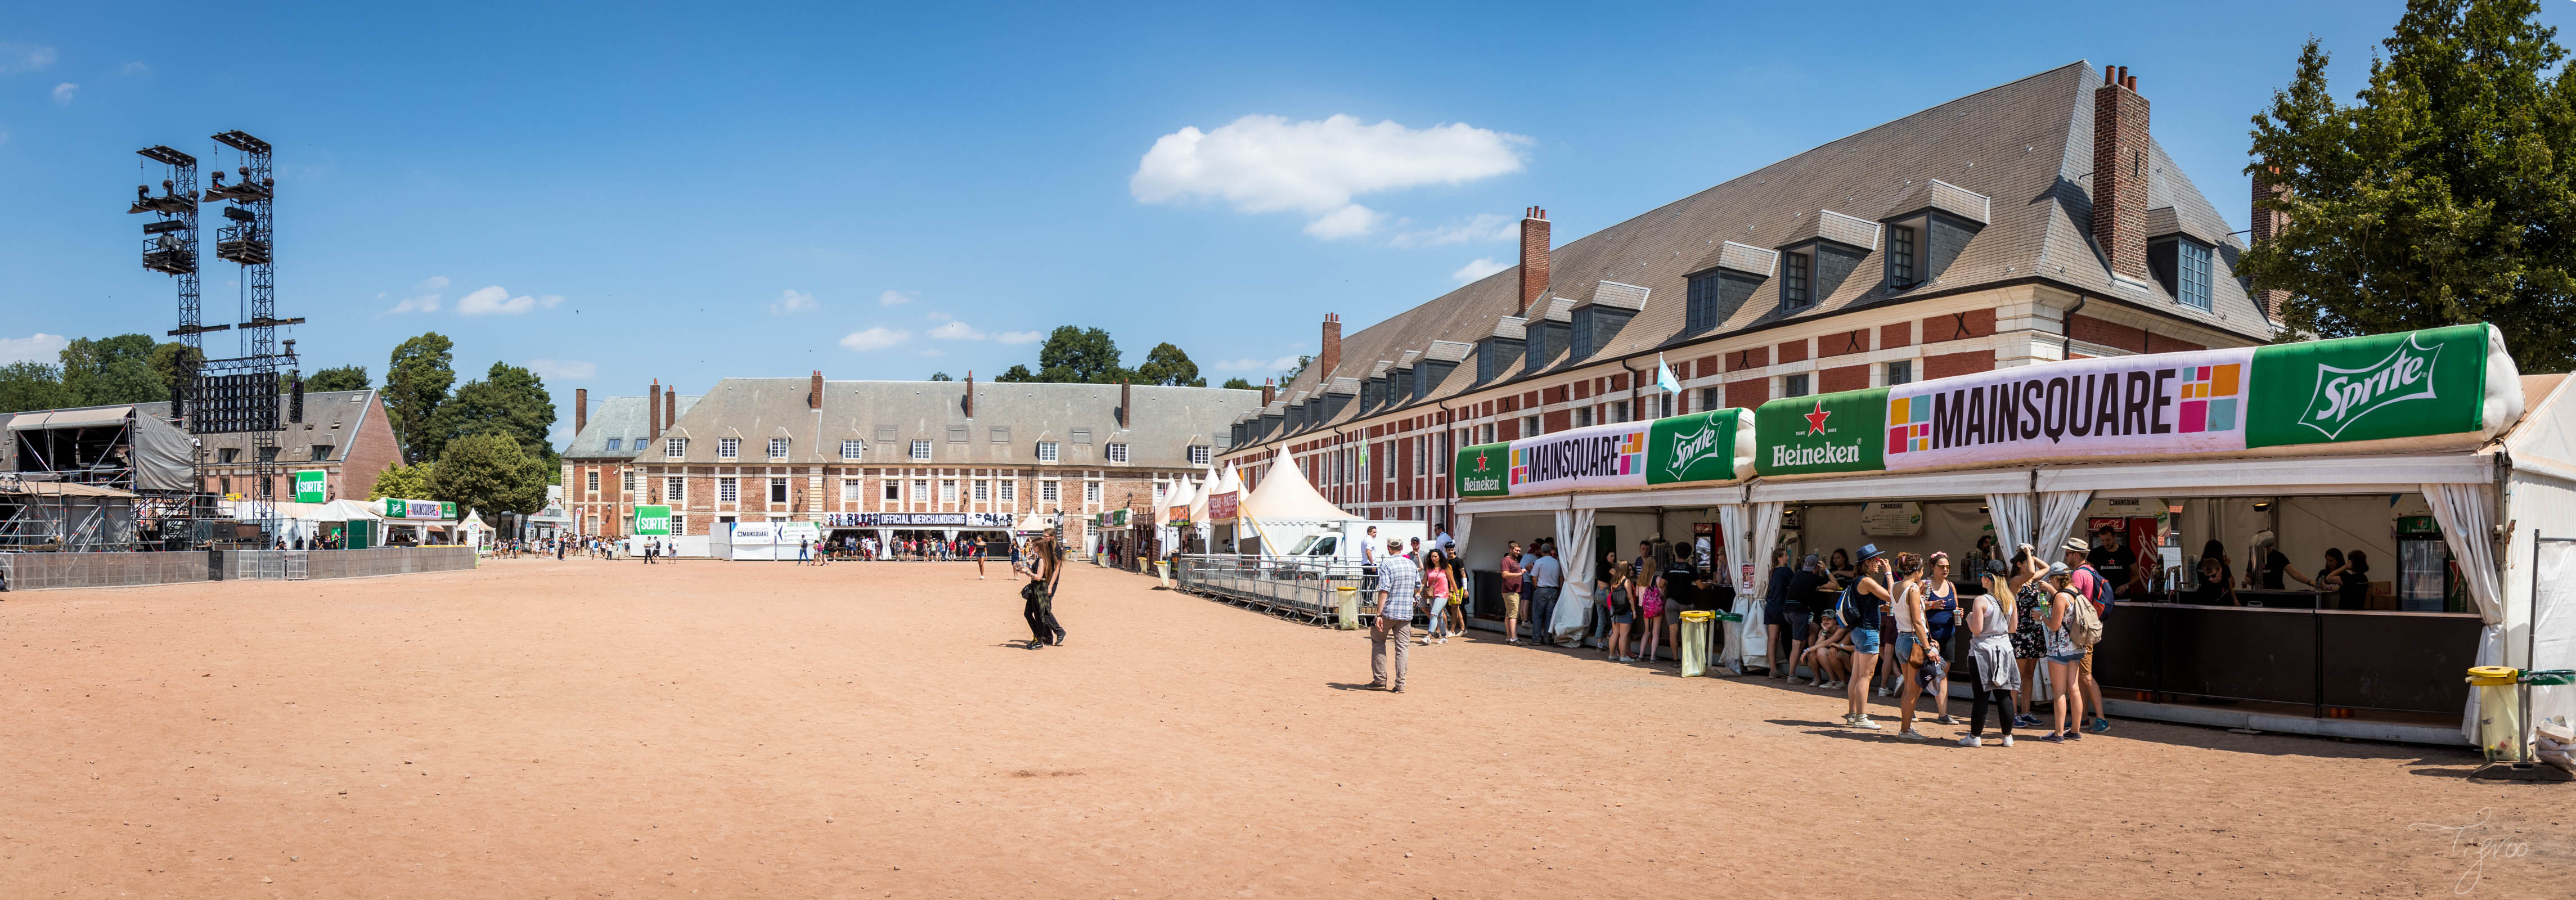 musique festival Arras Main Square